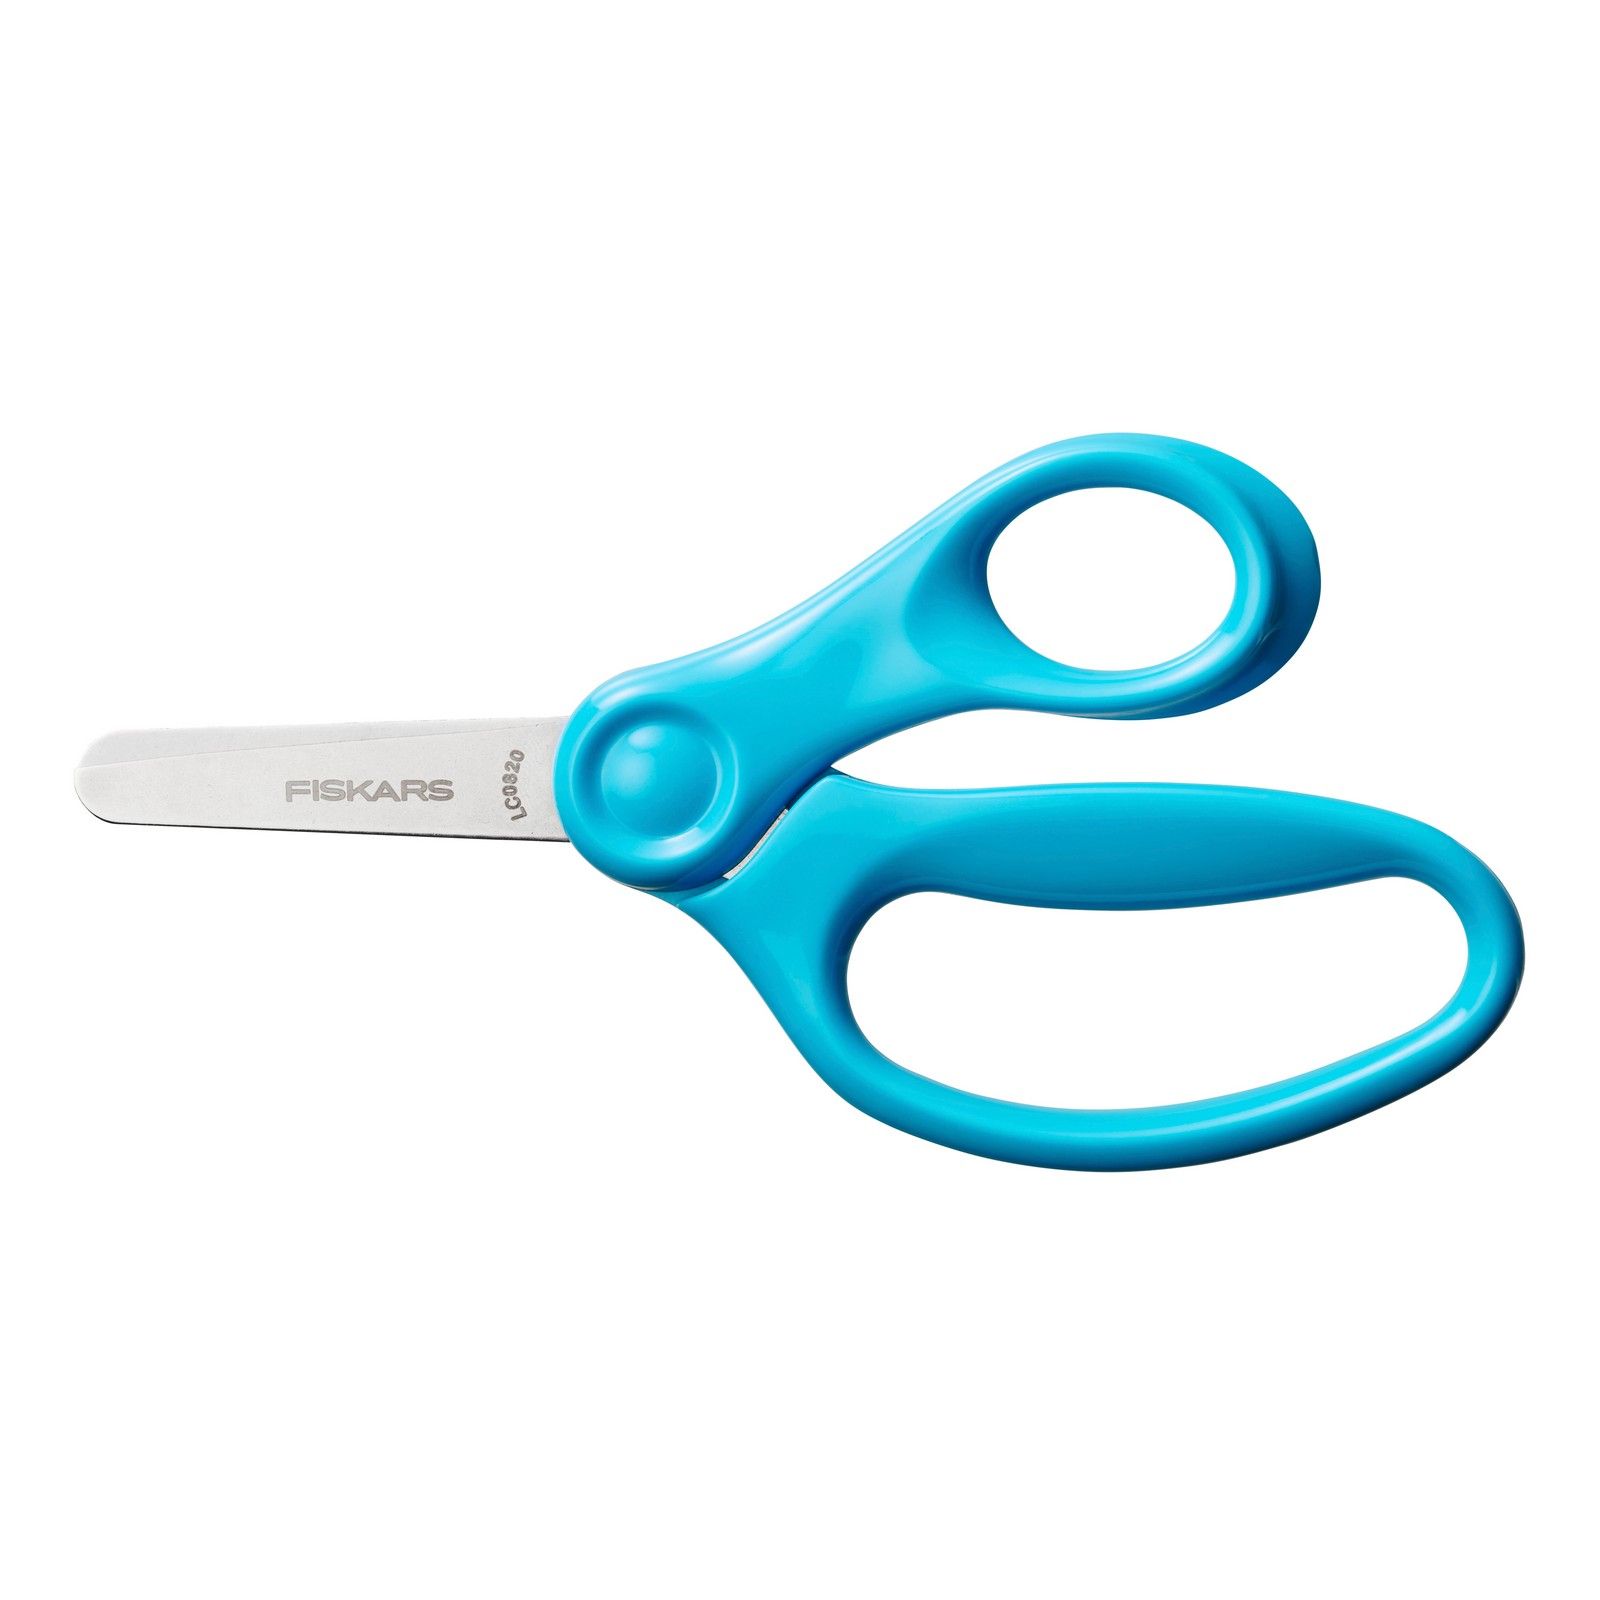 Fiskars • Blunt-tip Kids Scissors Turquoise 13cm for +6 years old